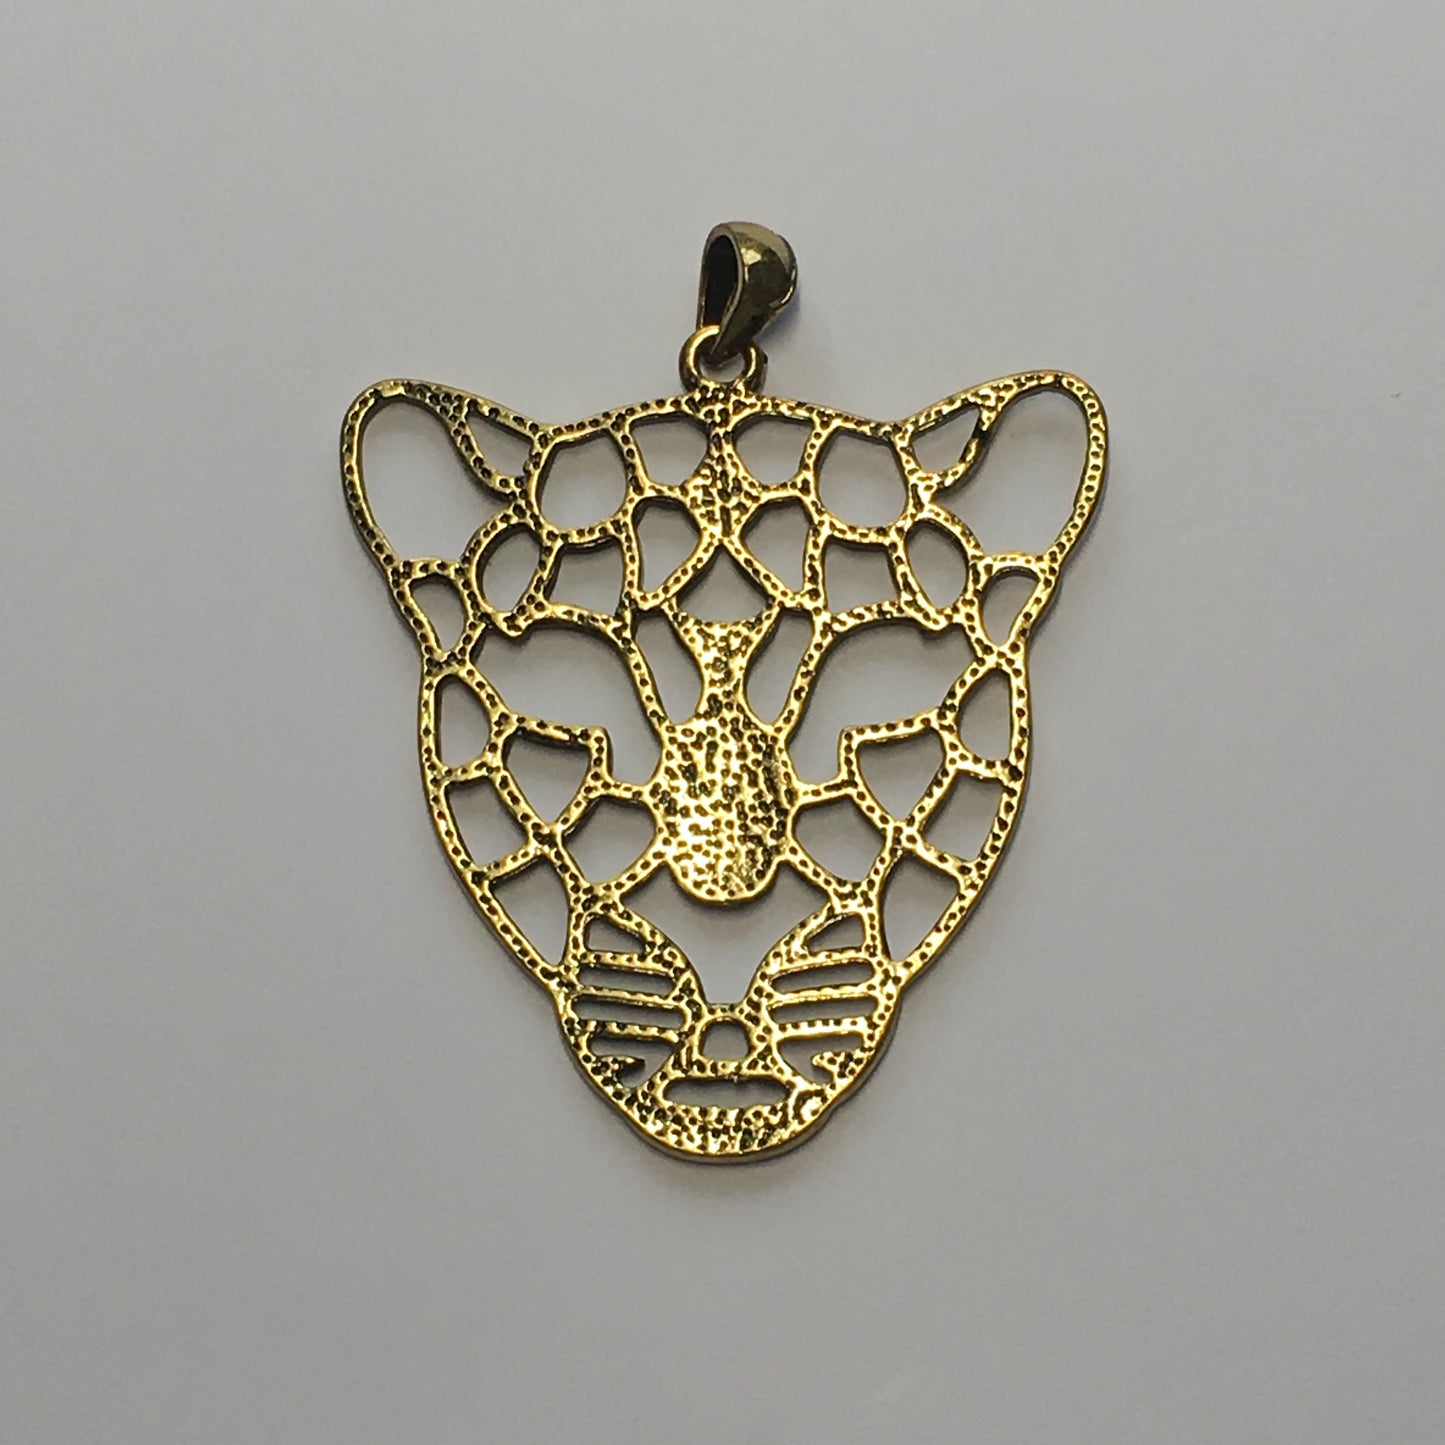 Antique Gold Geometric Leopard Pendant With Bail, 57 x 46 x 2 mm